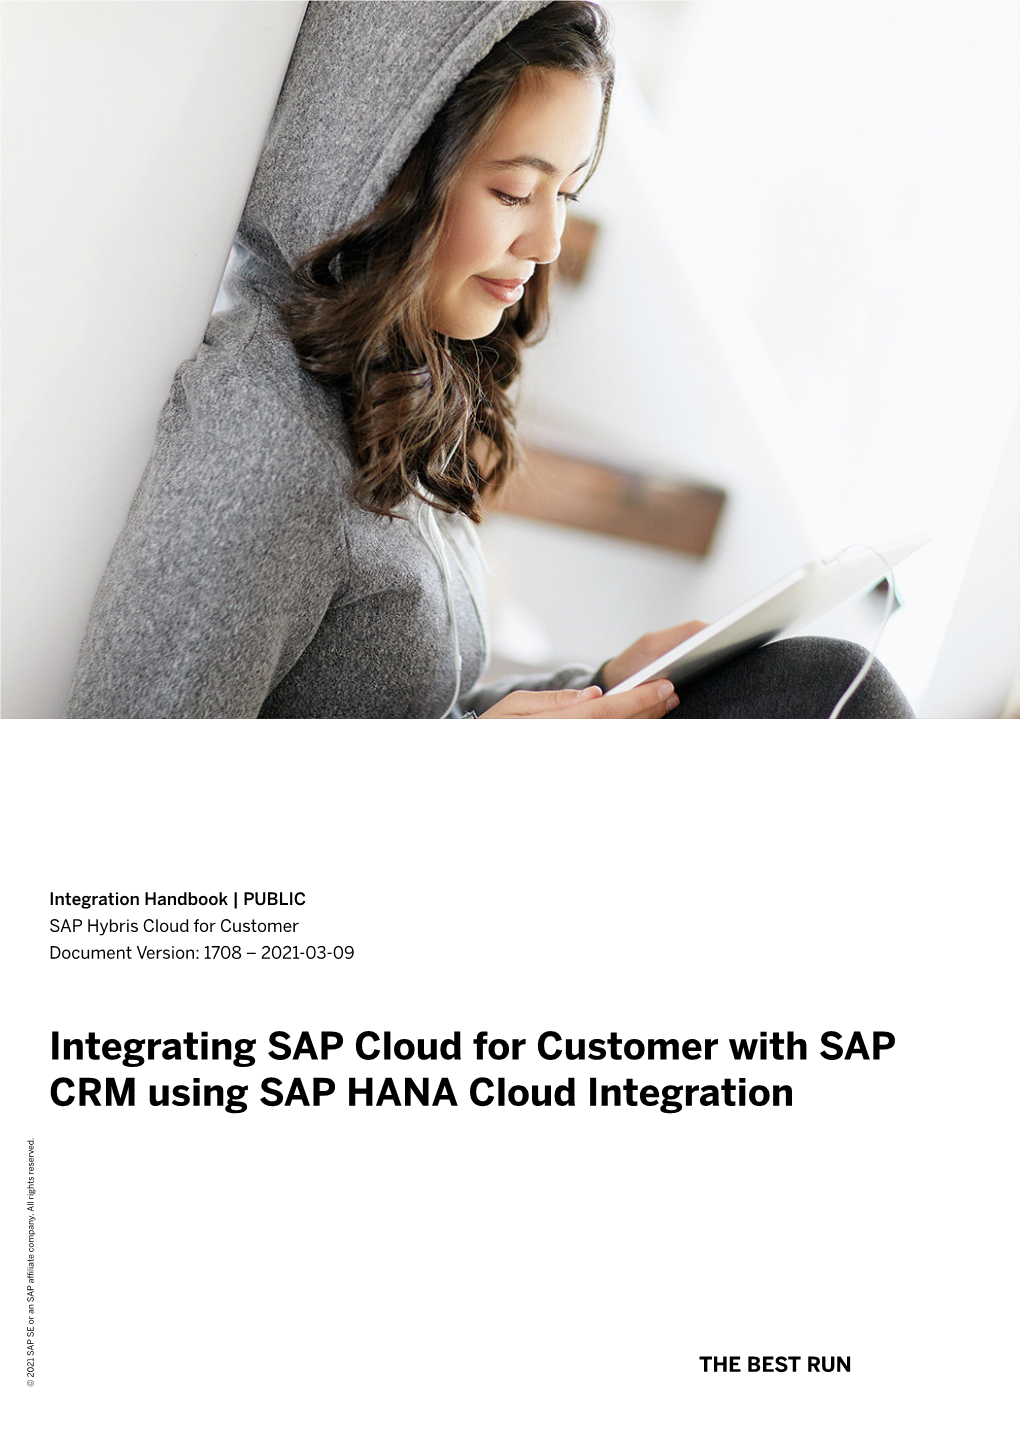 Integrating SAP Cloud for Customer with SAP CRM Using SAP HANA Cloud Integration Company